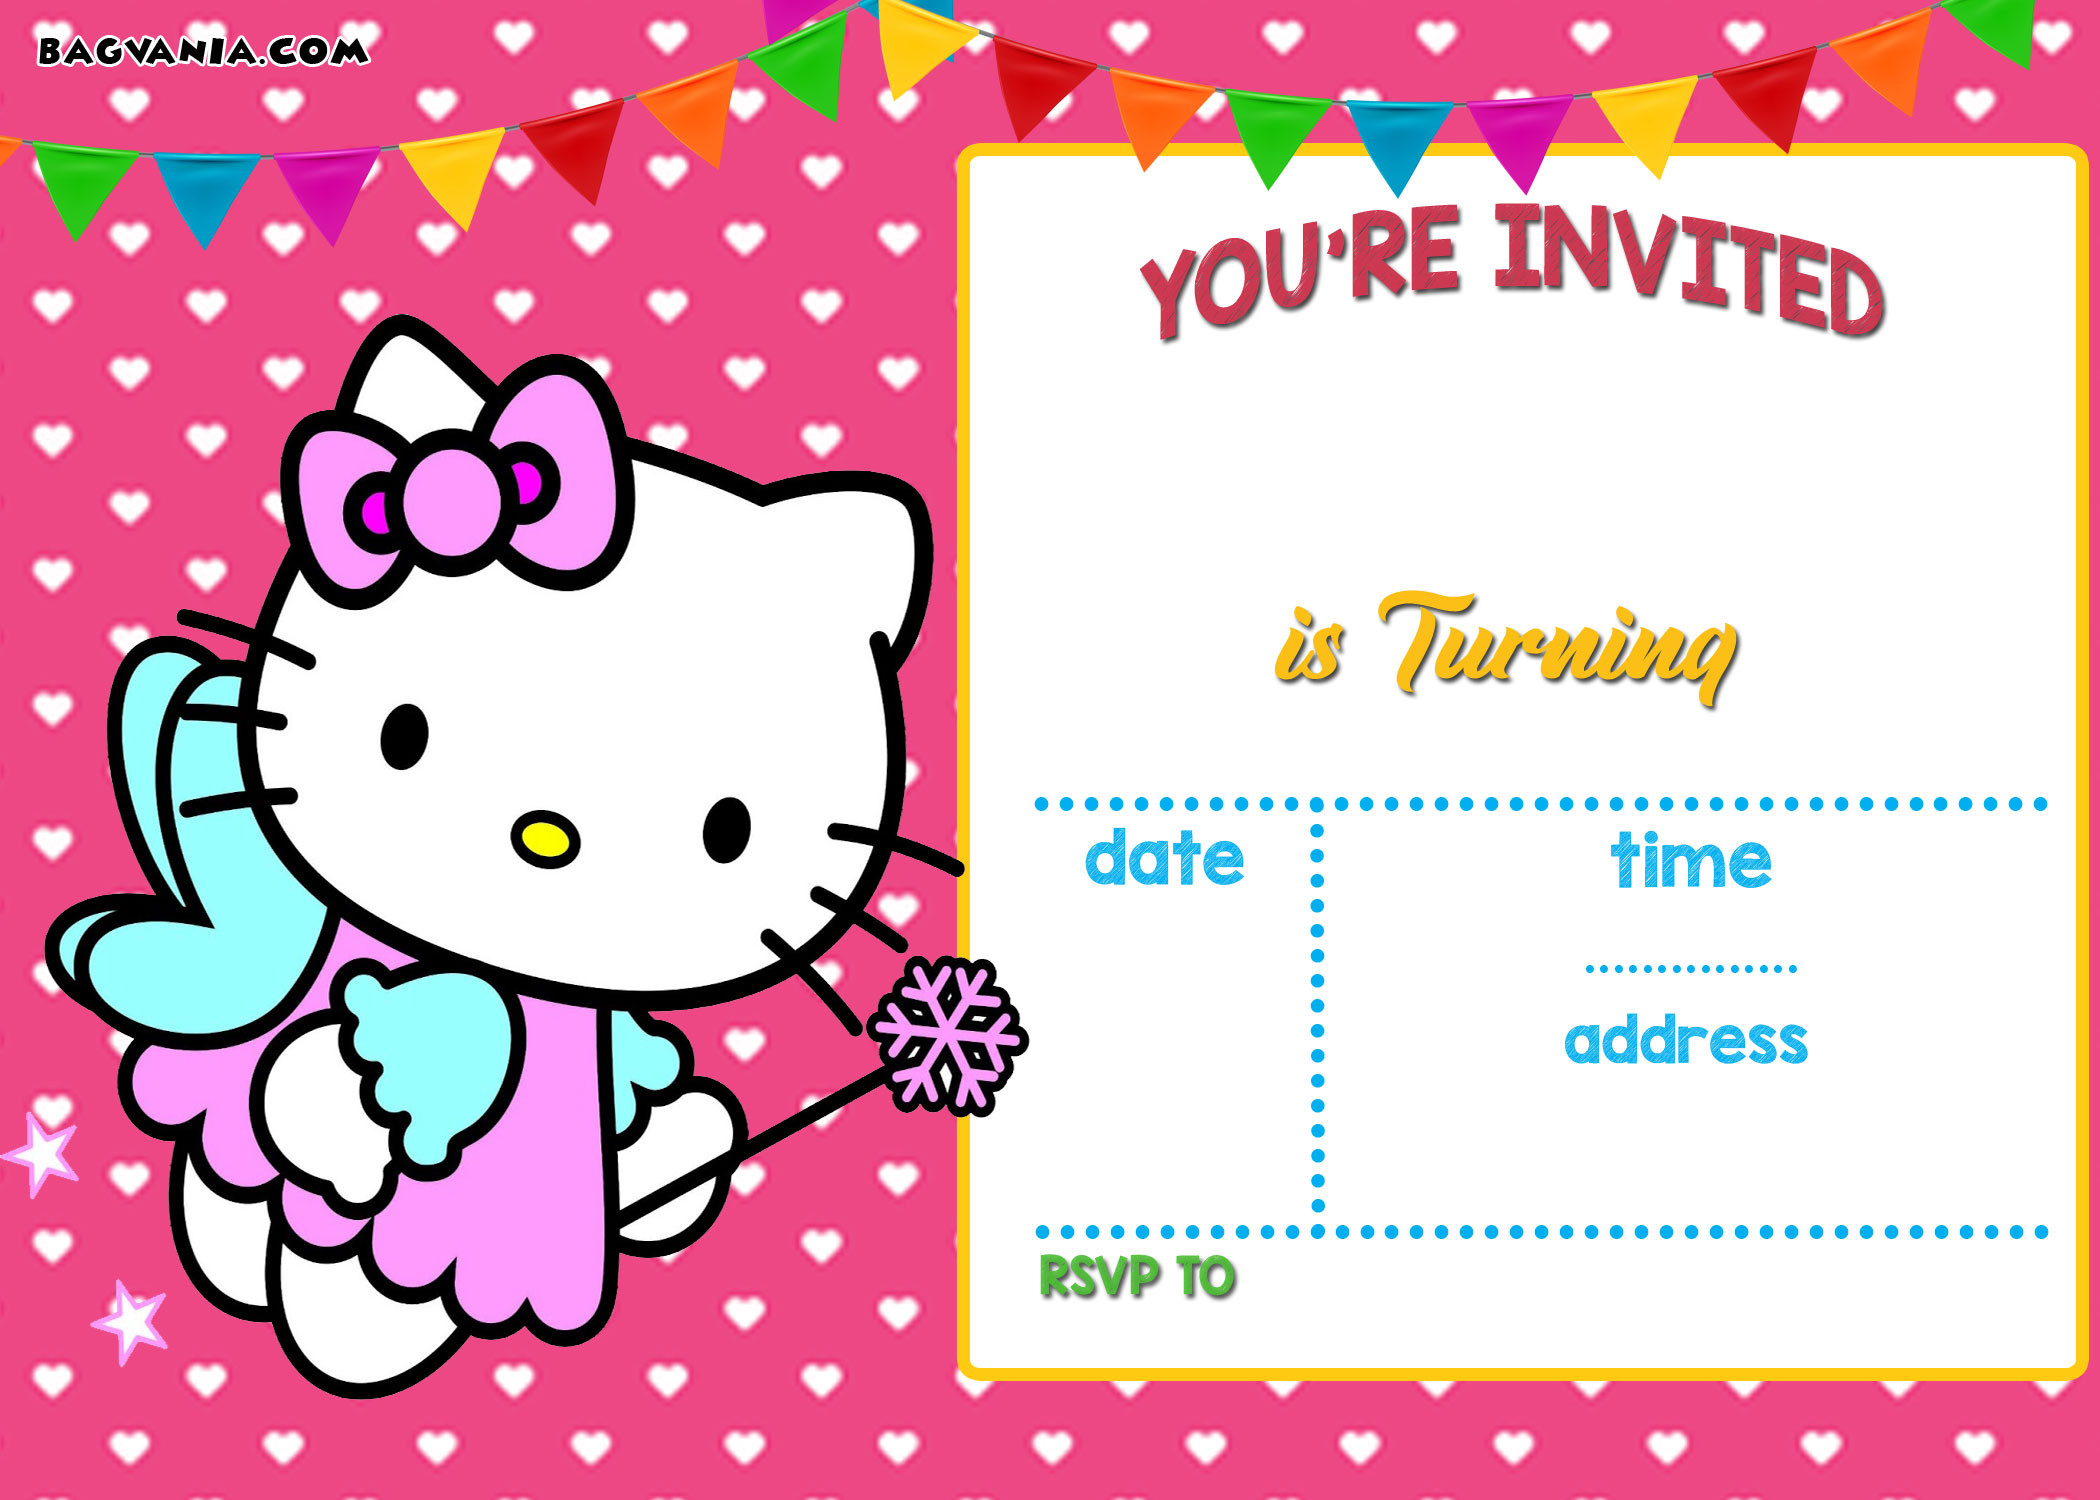 Personalized Hello Kitty Birthday Invitations
 FREE Personalized Hello Kitty Birthday Invitations